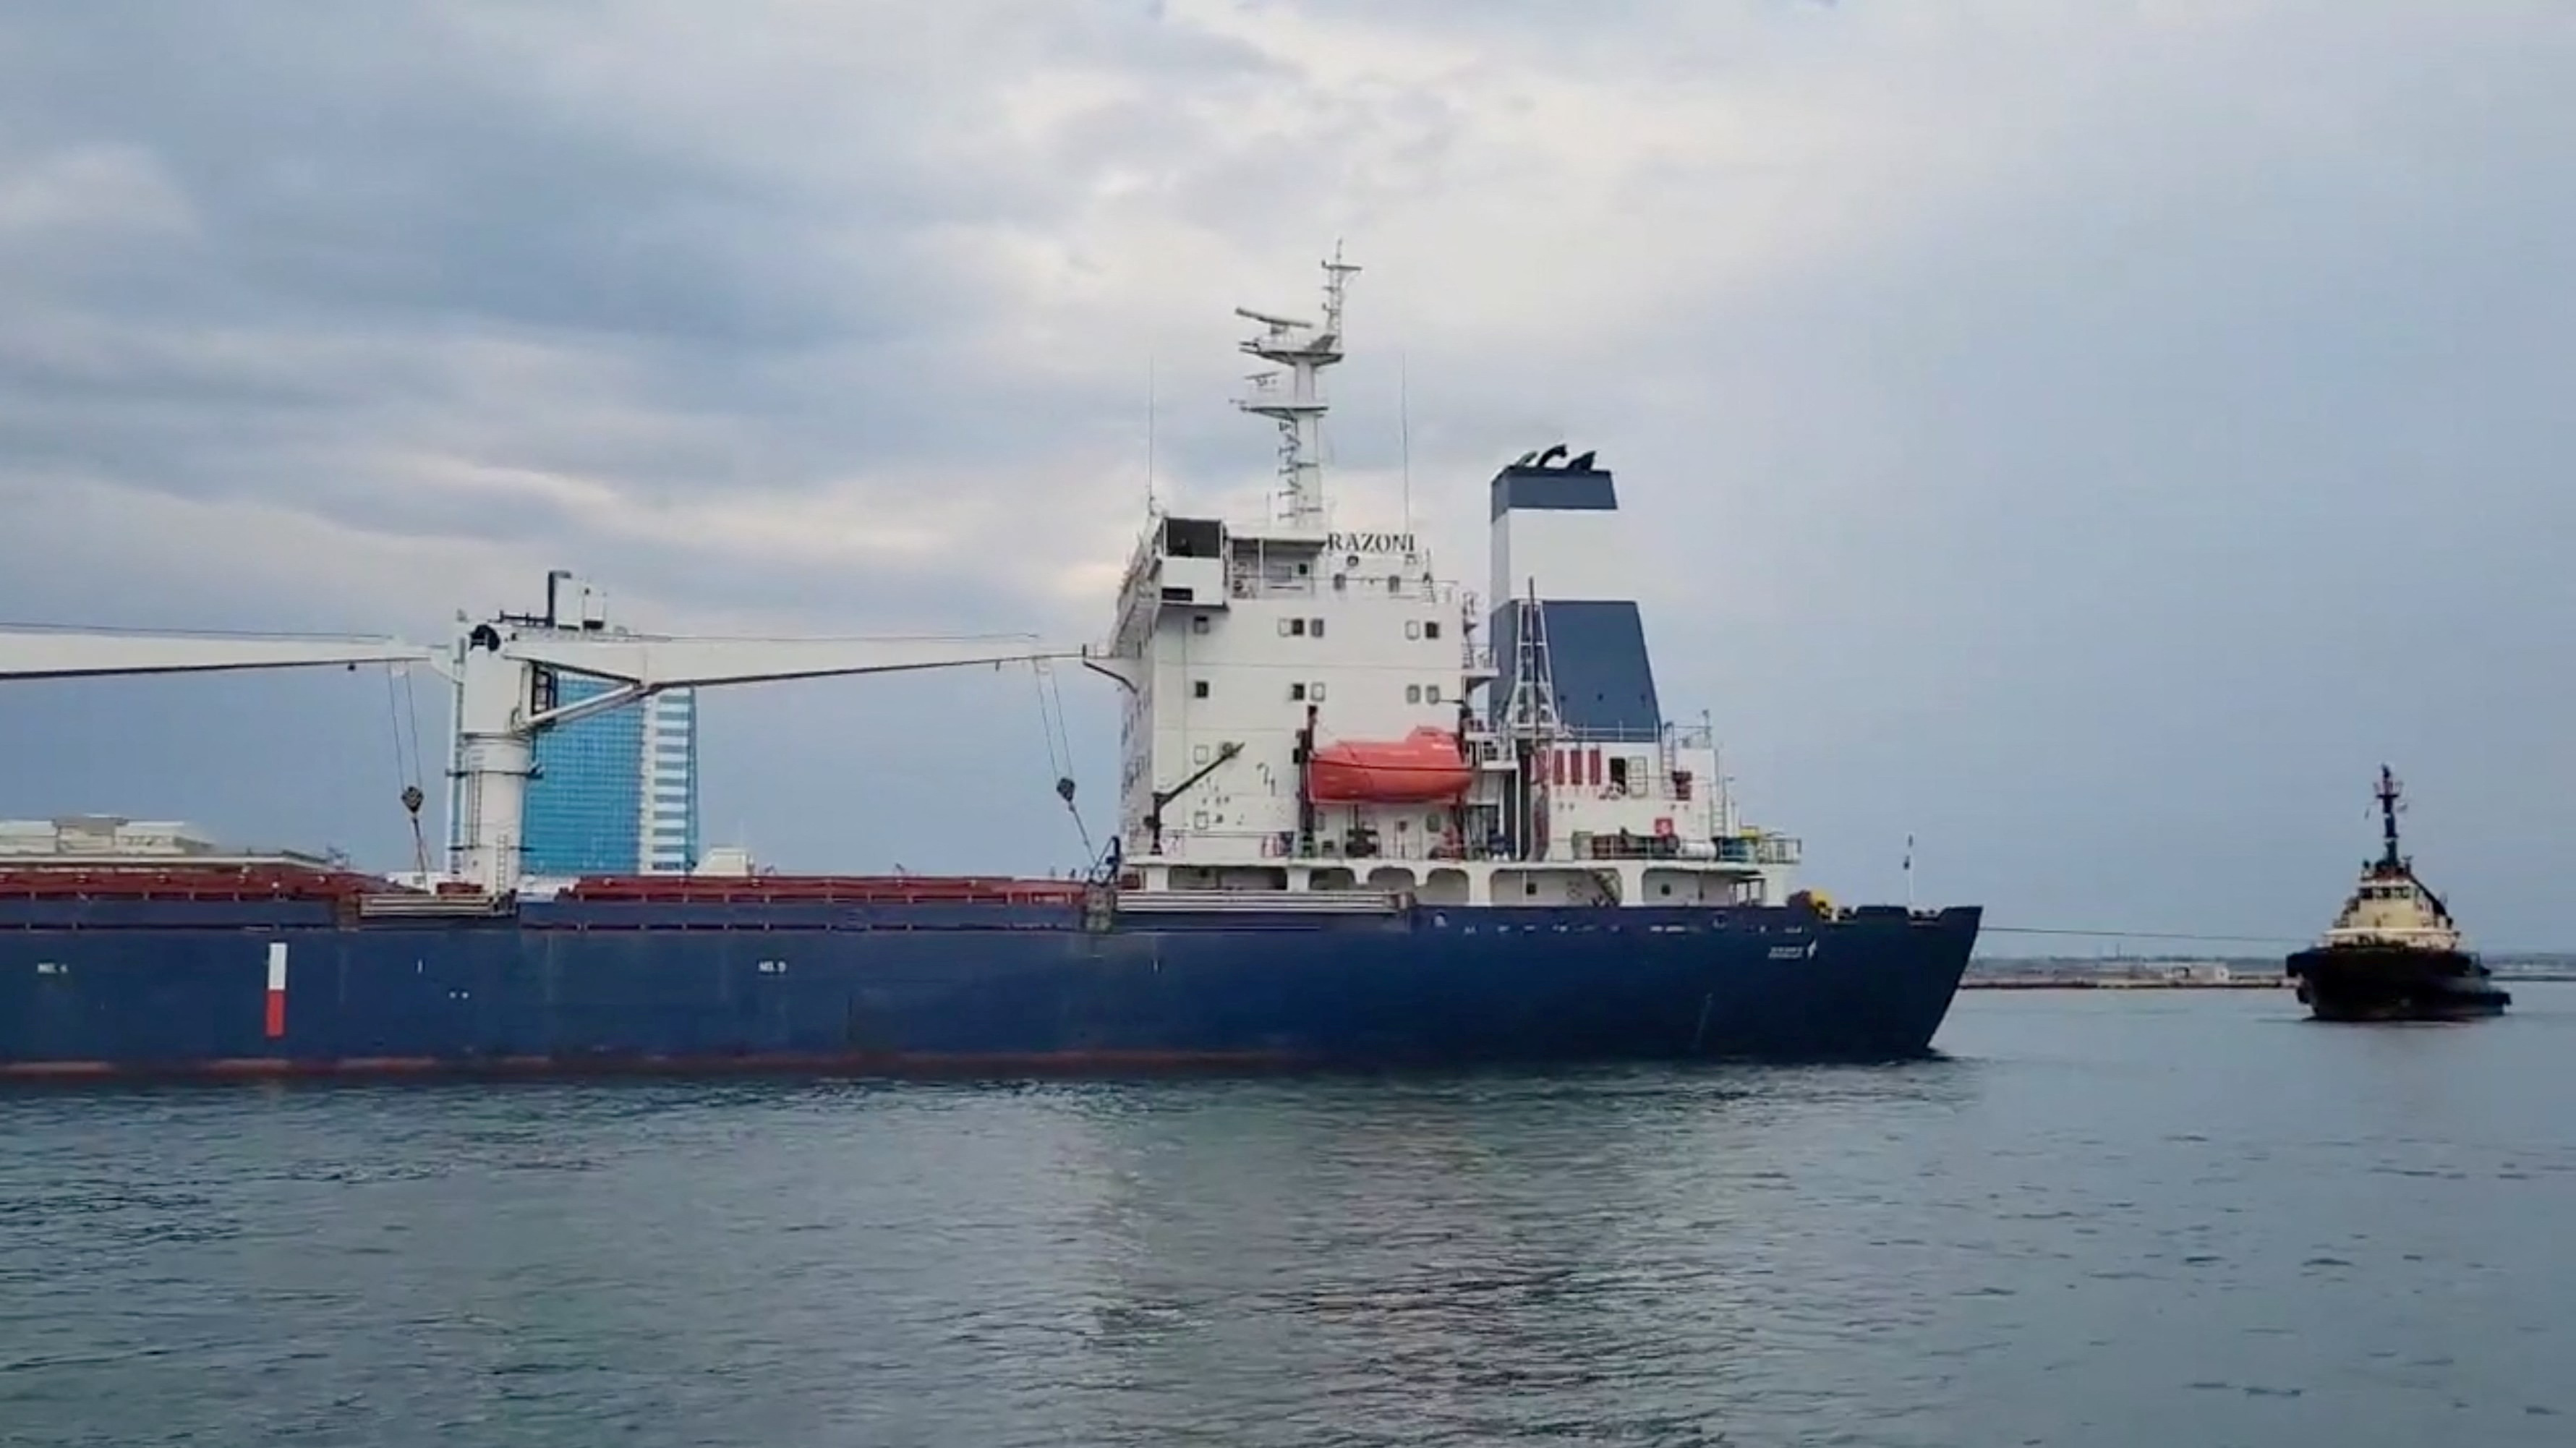 The Sierra Leone-flagged cargo ship, Razoni carrying Ukrainian grain leaves the port, in Odesa